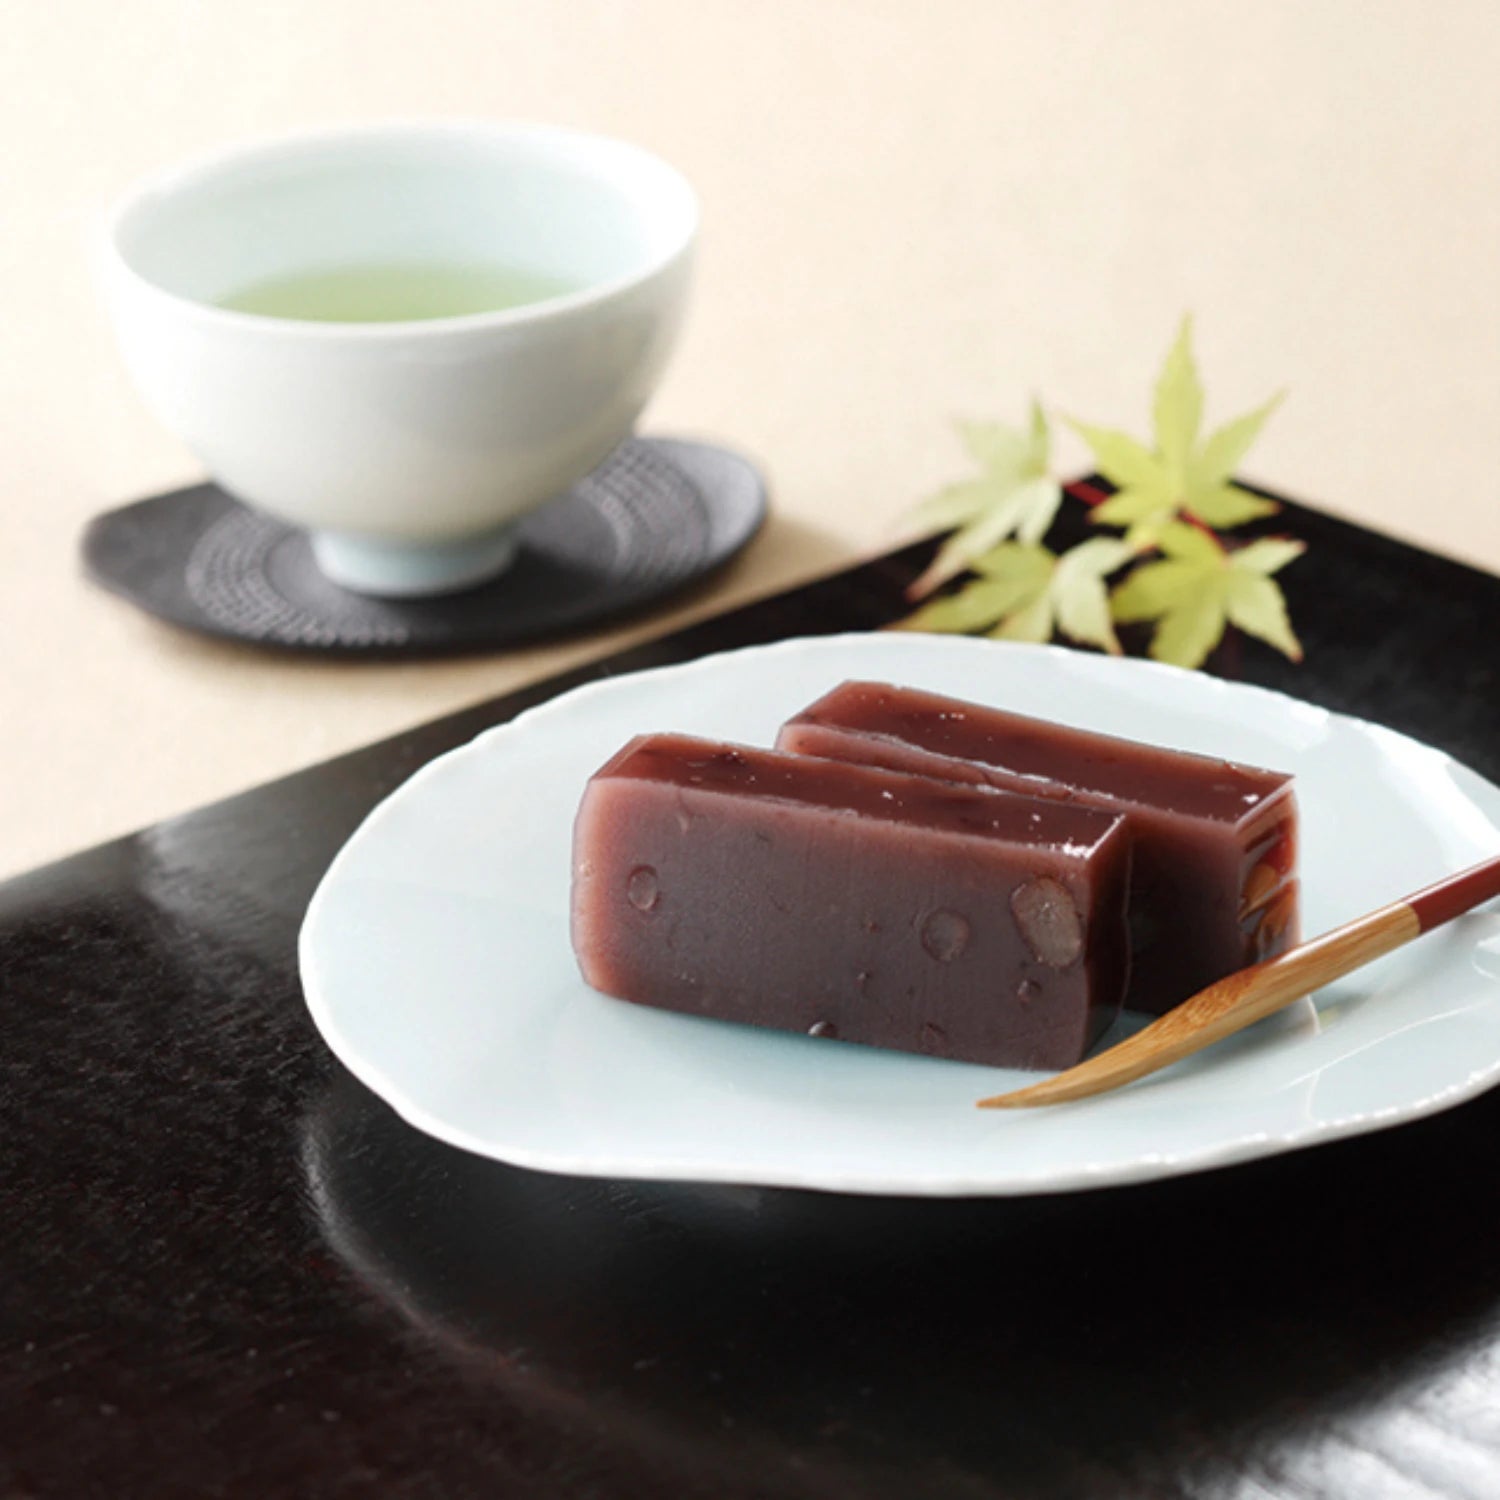 Yamazaki Yohkan Traditional Japanese Sweet 5 Flavors Mixed 60g (5 Pieces) - Buy Me Japan